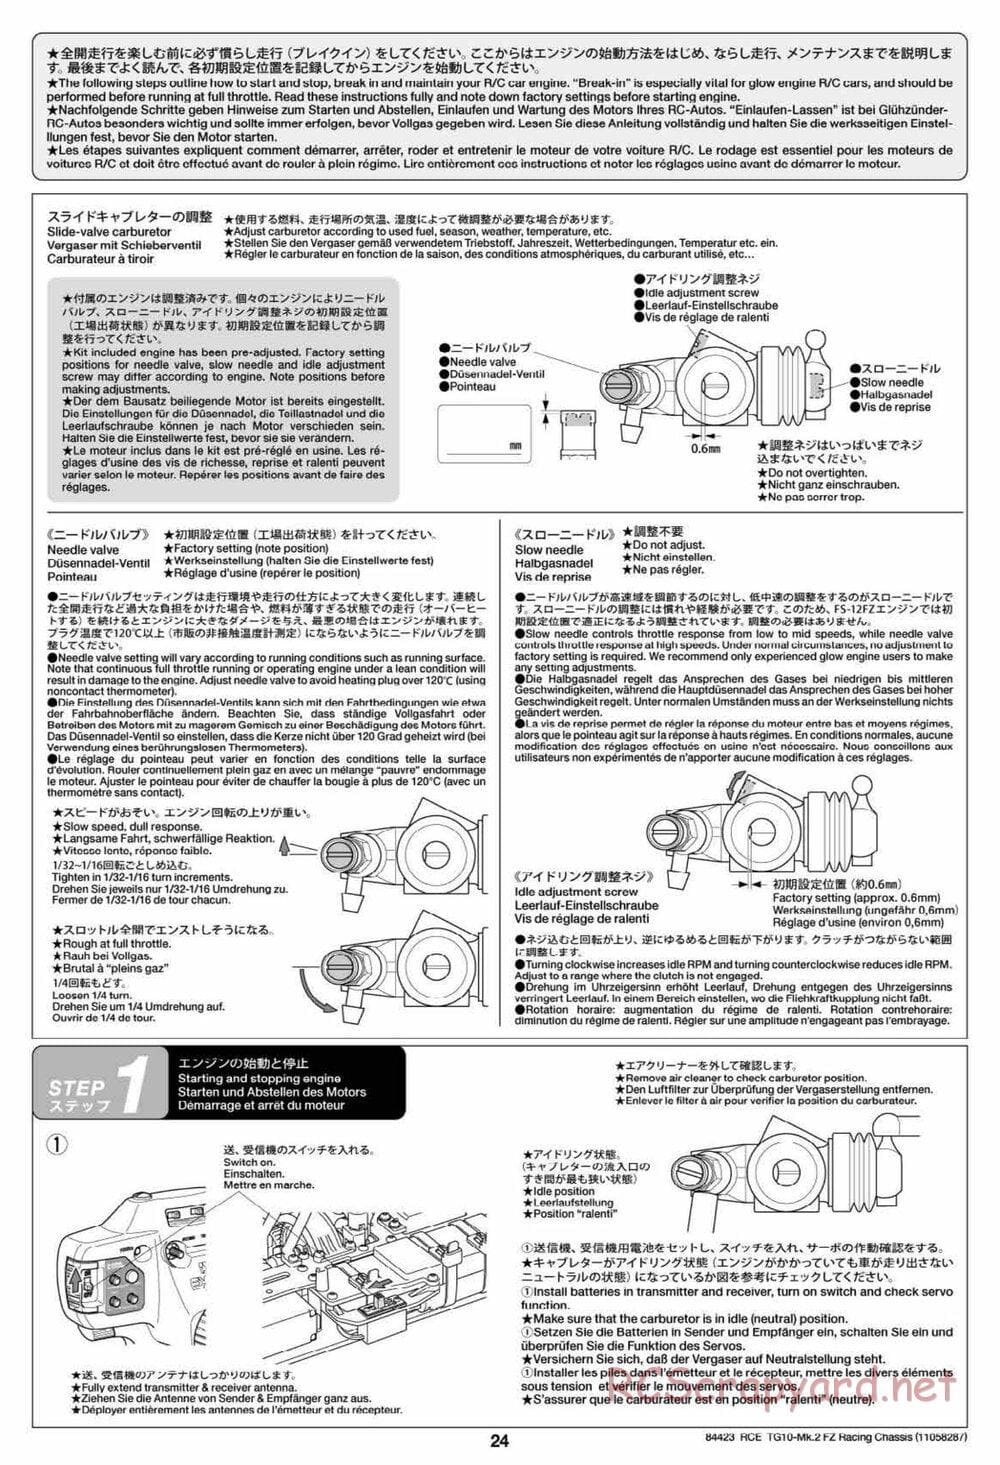 Tamiya - TG10 Mk.2 FZ Racing Chassis - Manual - Page 24